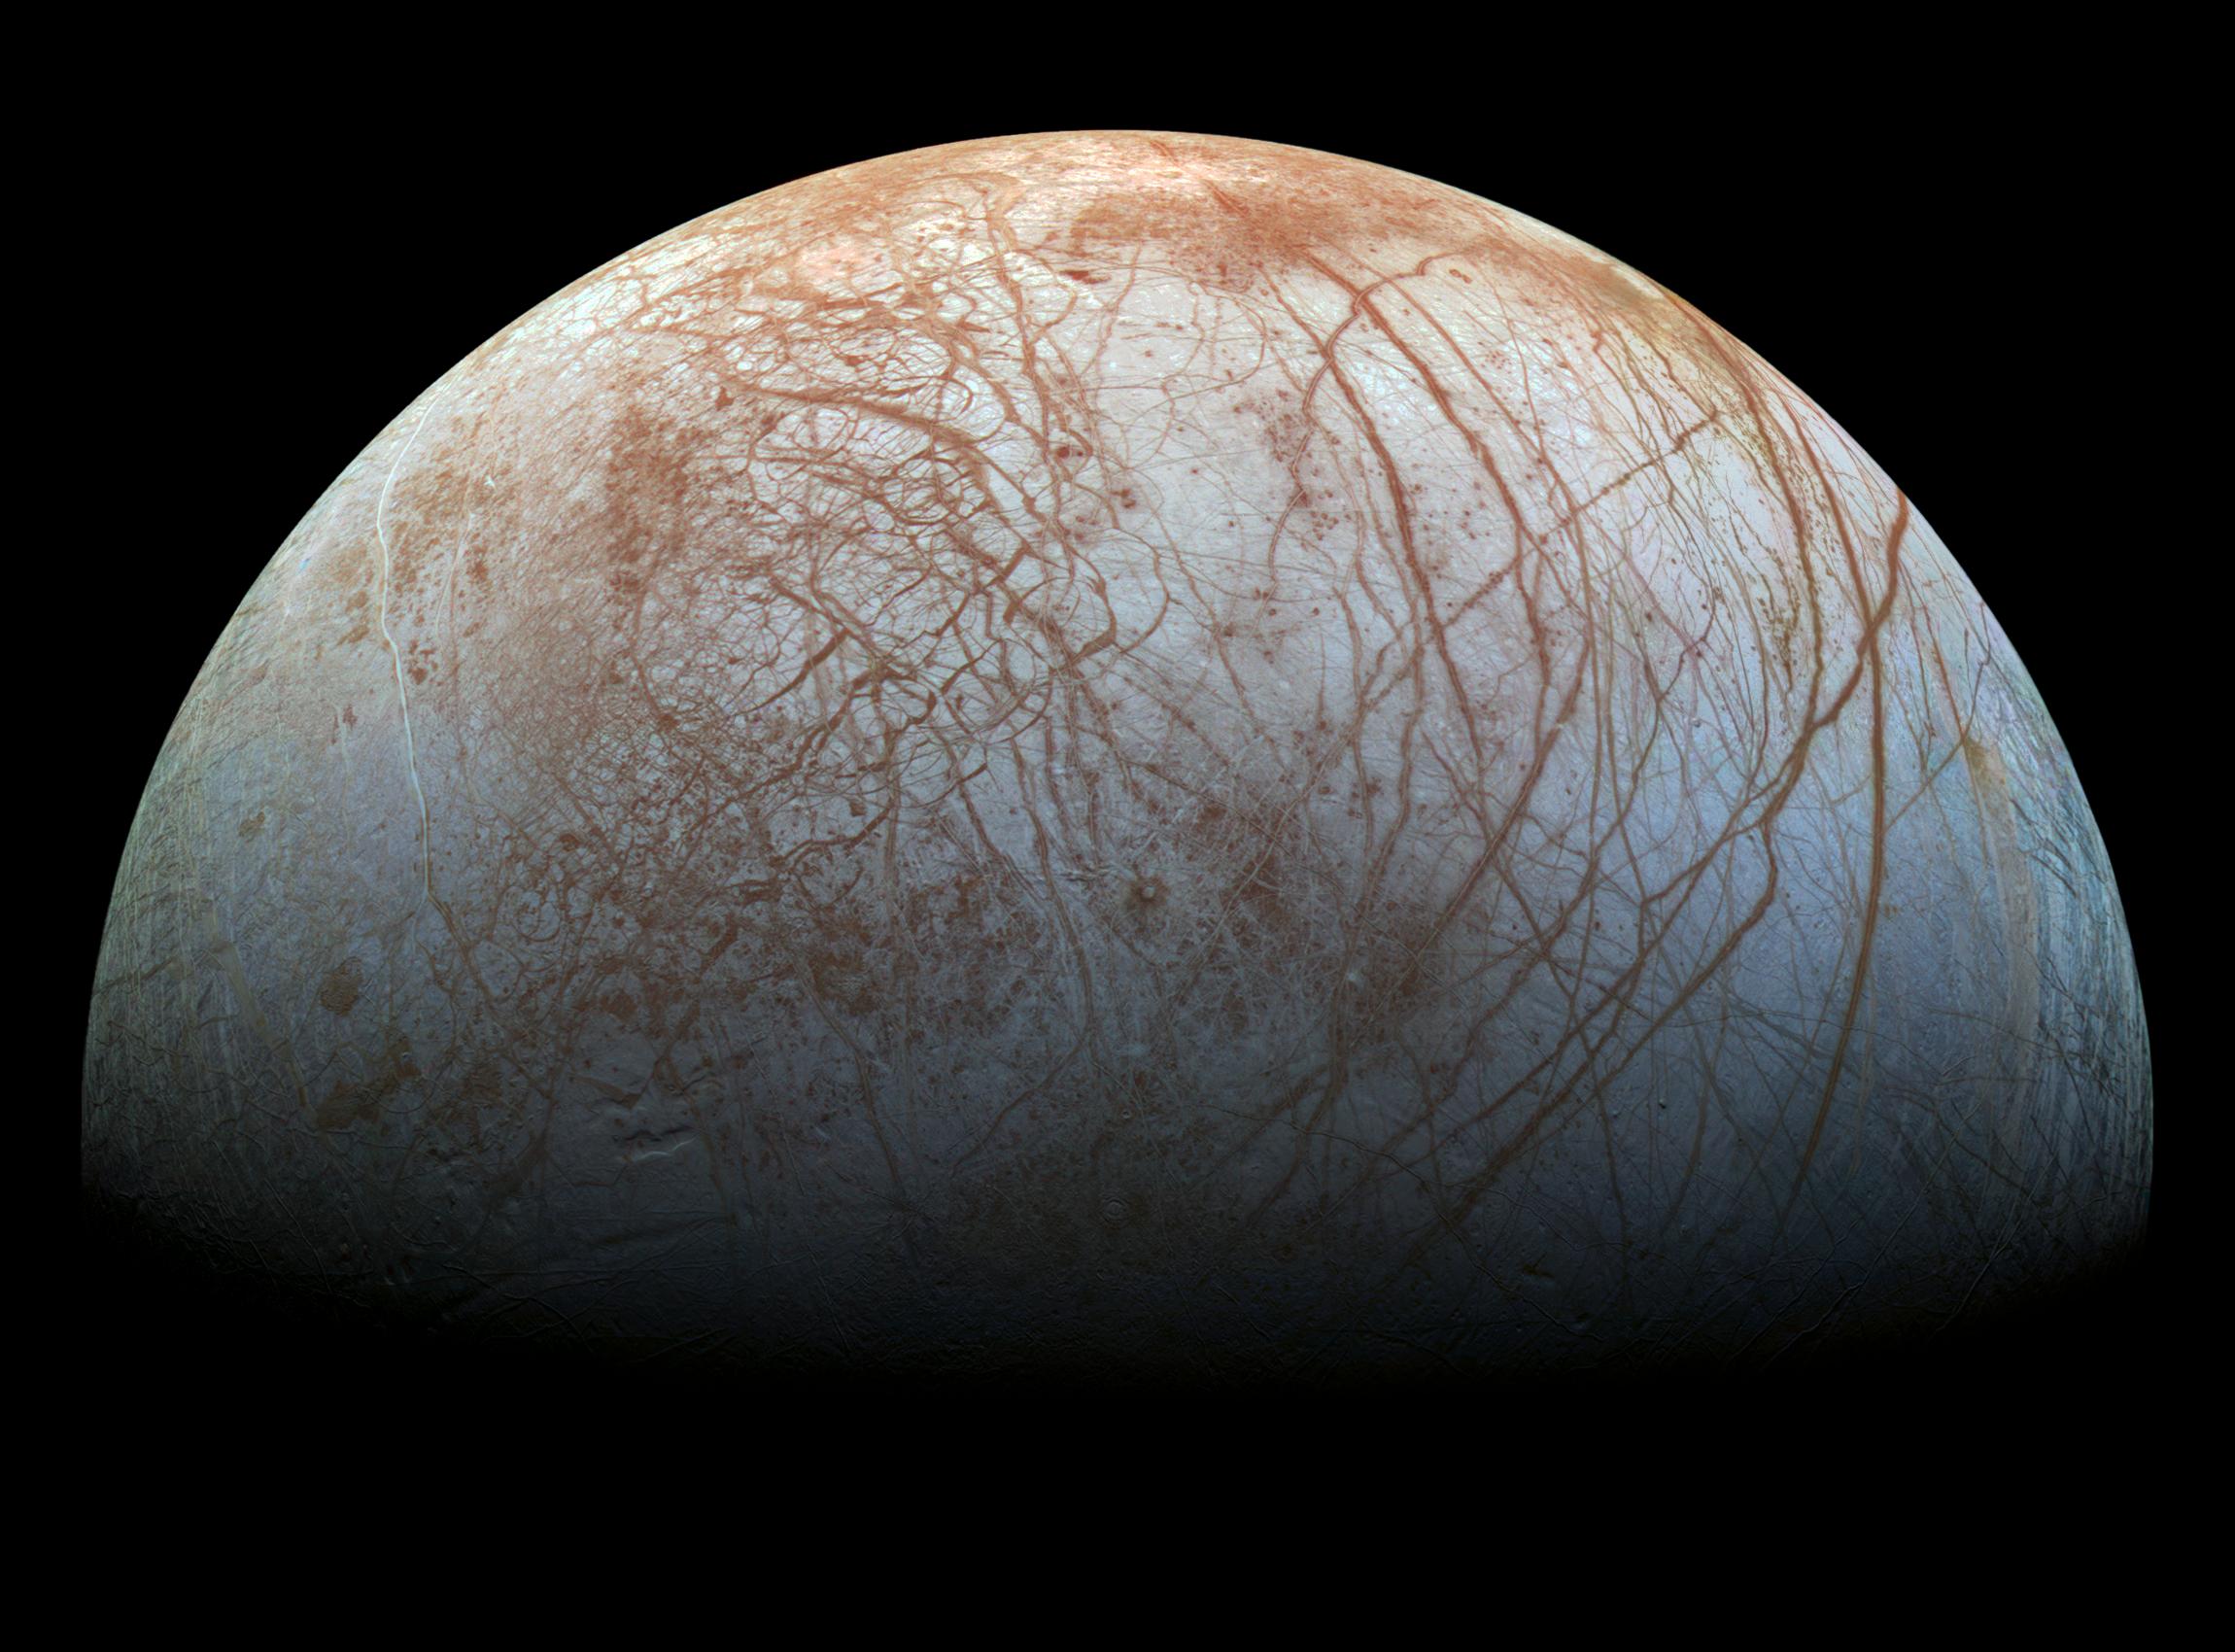 Jupiter icy moon Europa